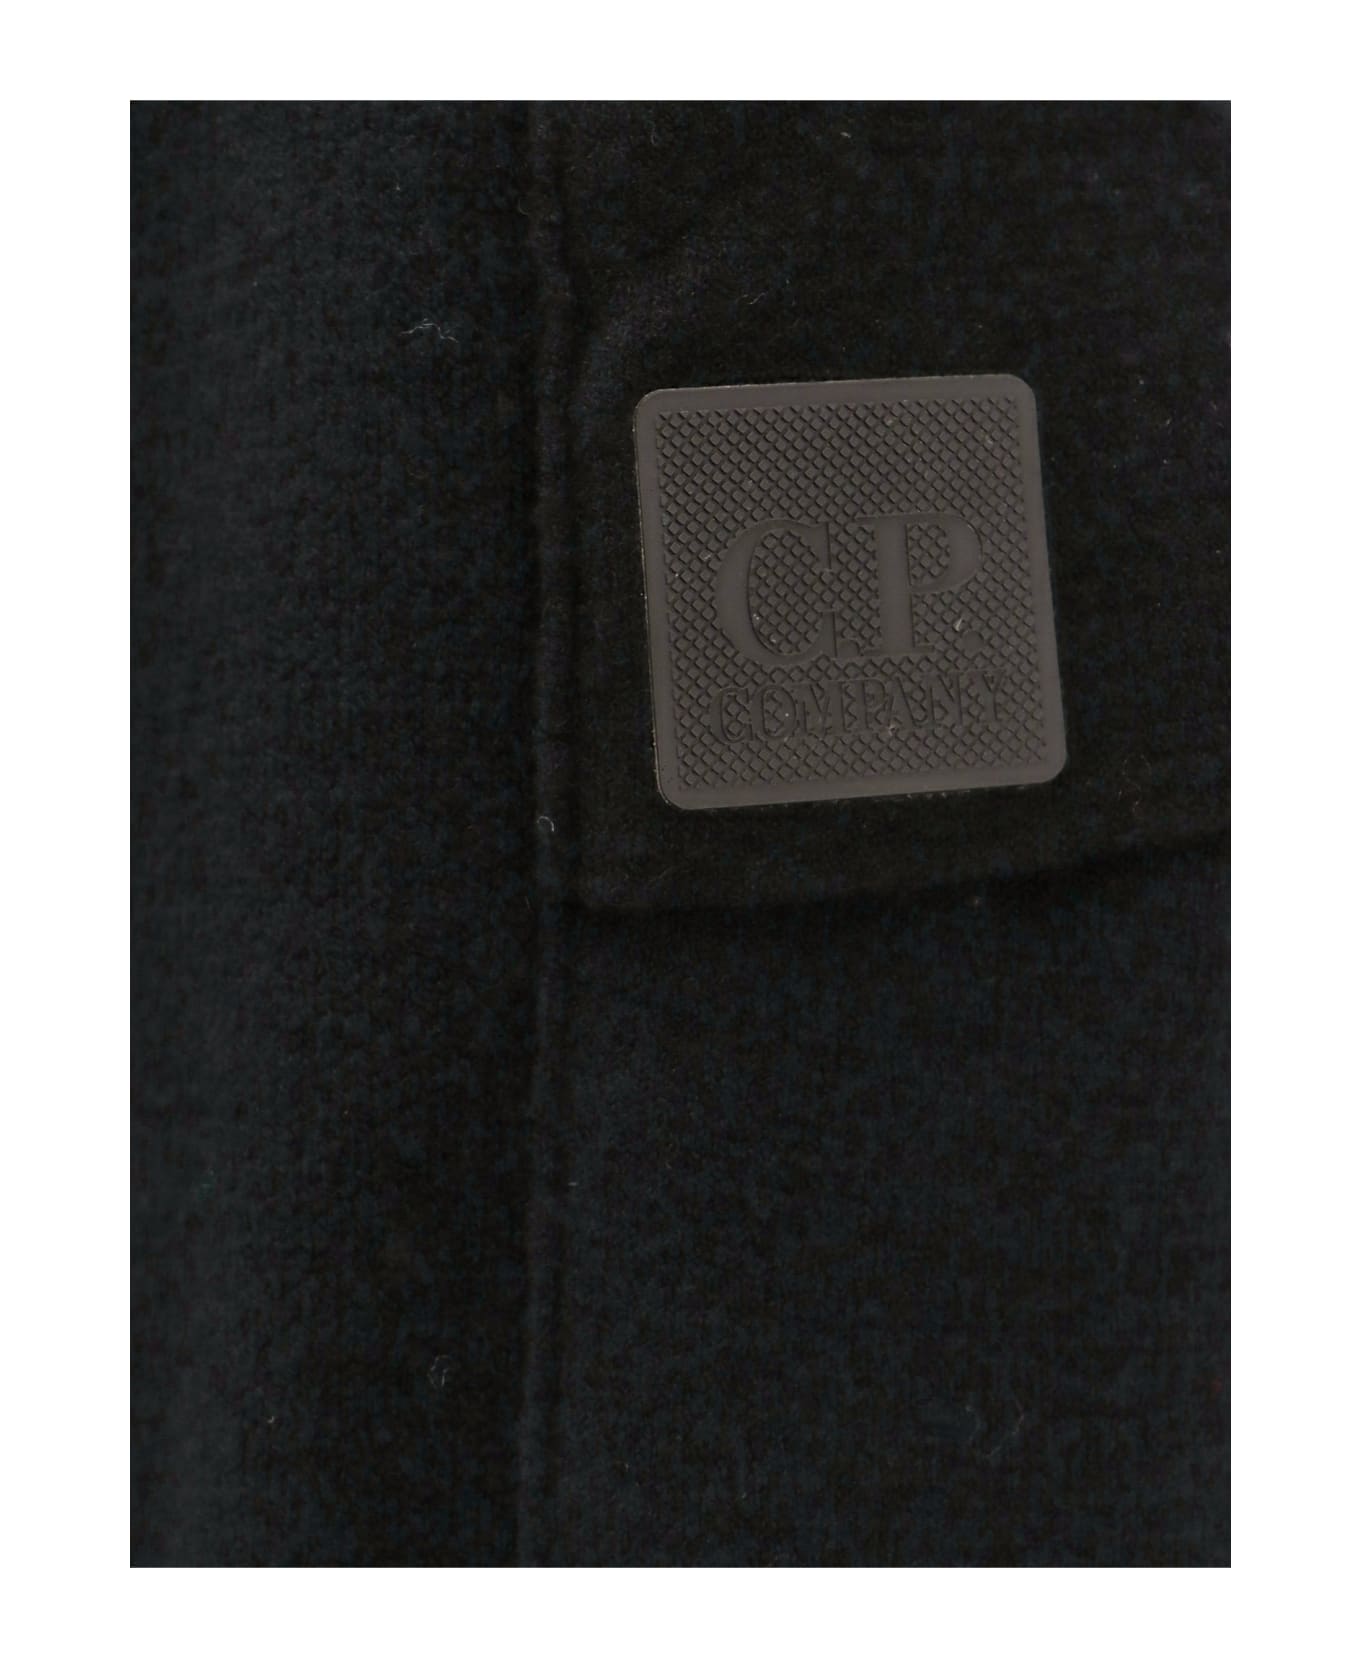 C.P. Company Sweater - Black ニットウェア